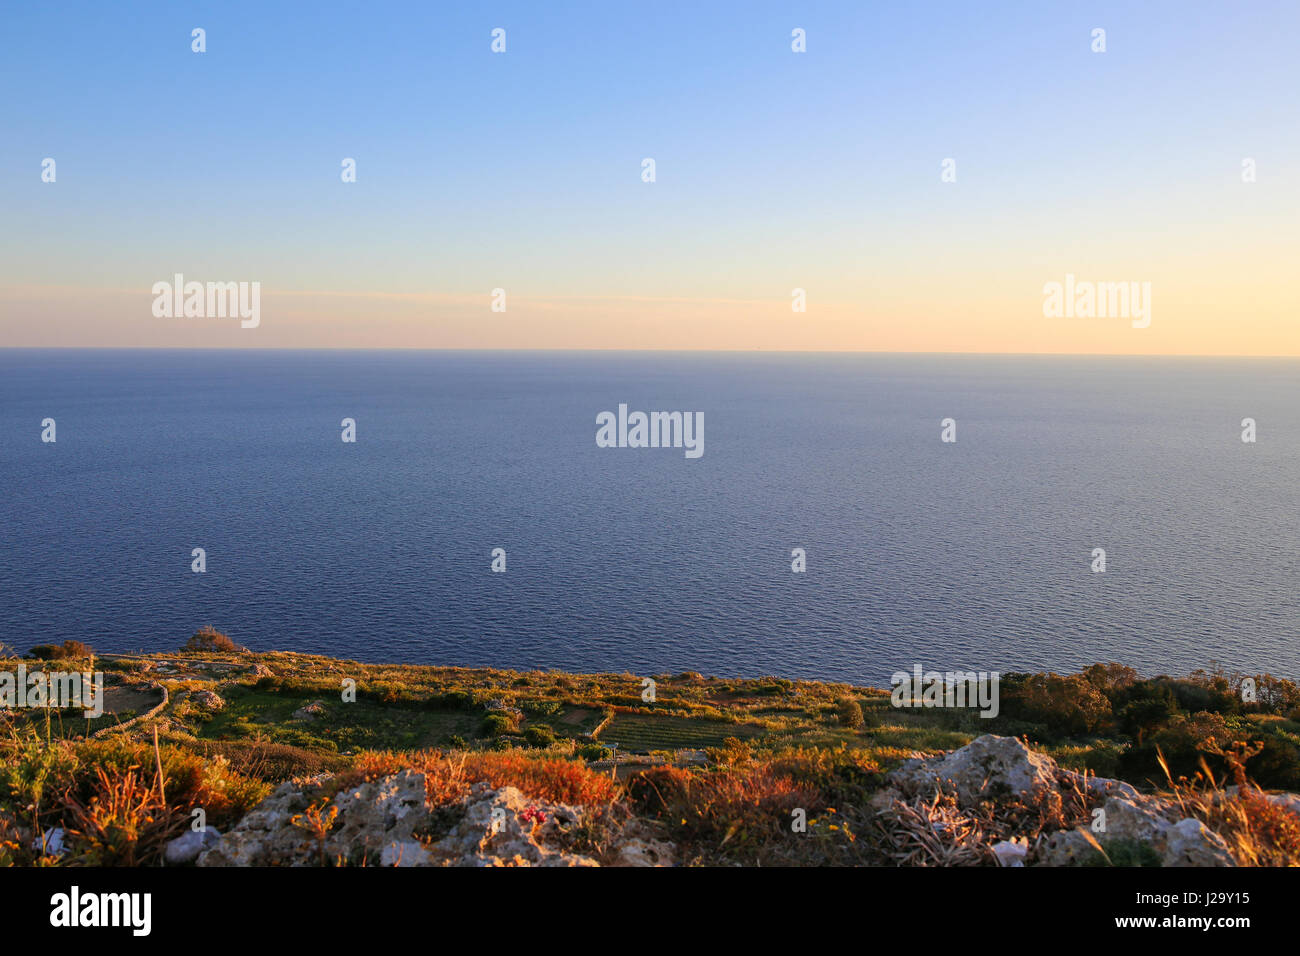 Klippen von Dingli, Malta Stockfoto